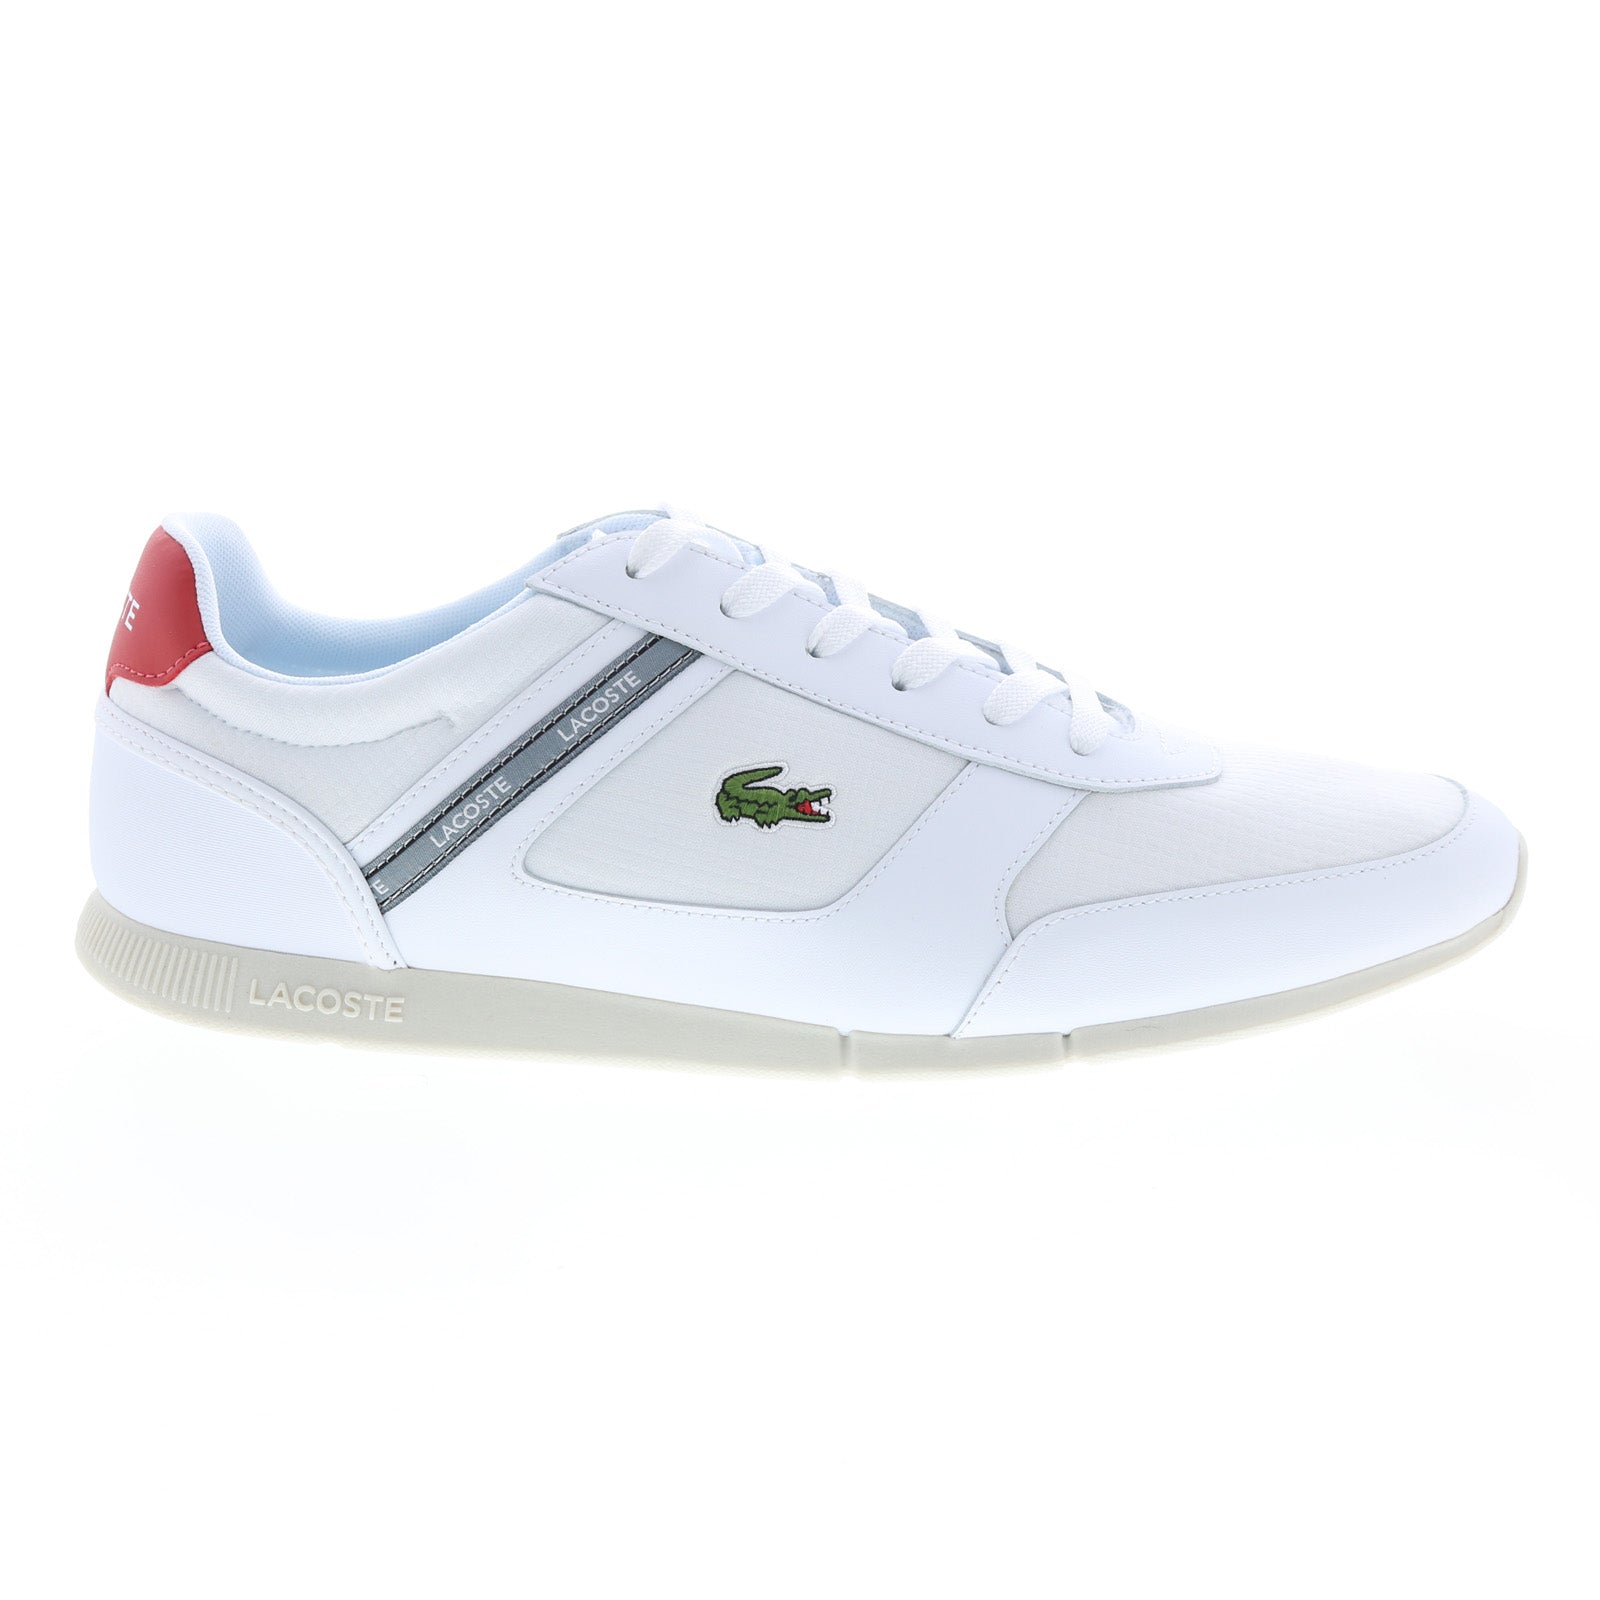 Lacoste Menerva Sport 0722 1 Cma White Canvas Lifestyle Sneakers - Ruze Shoes